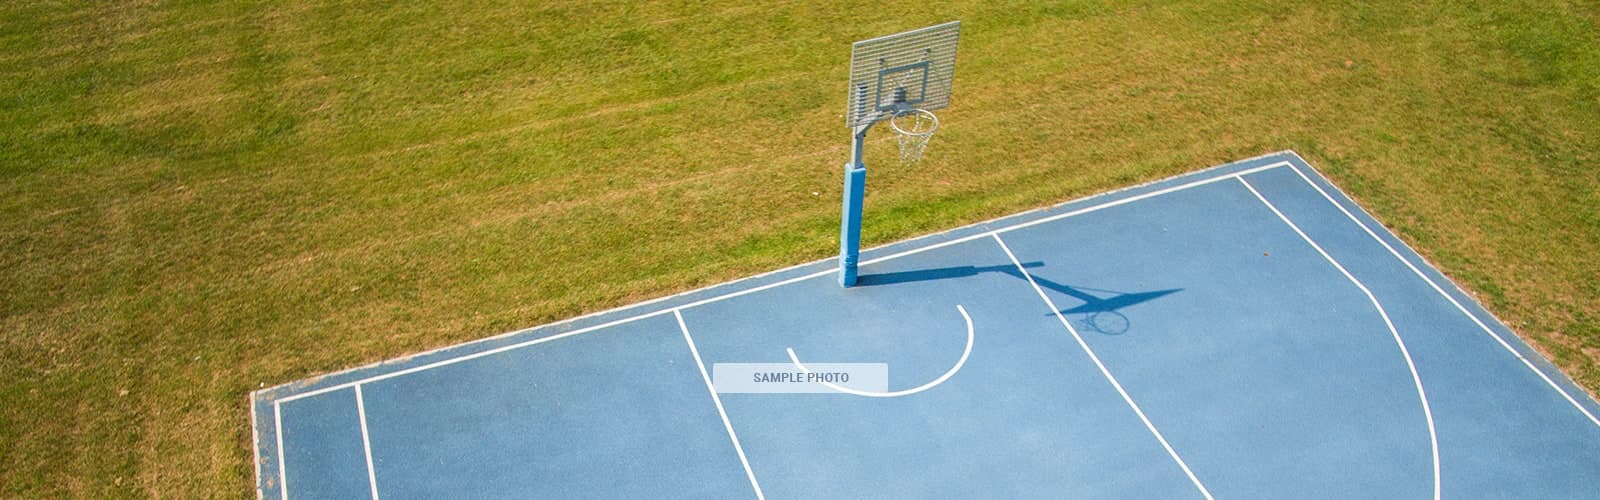 Millennium Middle School Blacktop / Basketball Courts in Sanford Florida